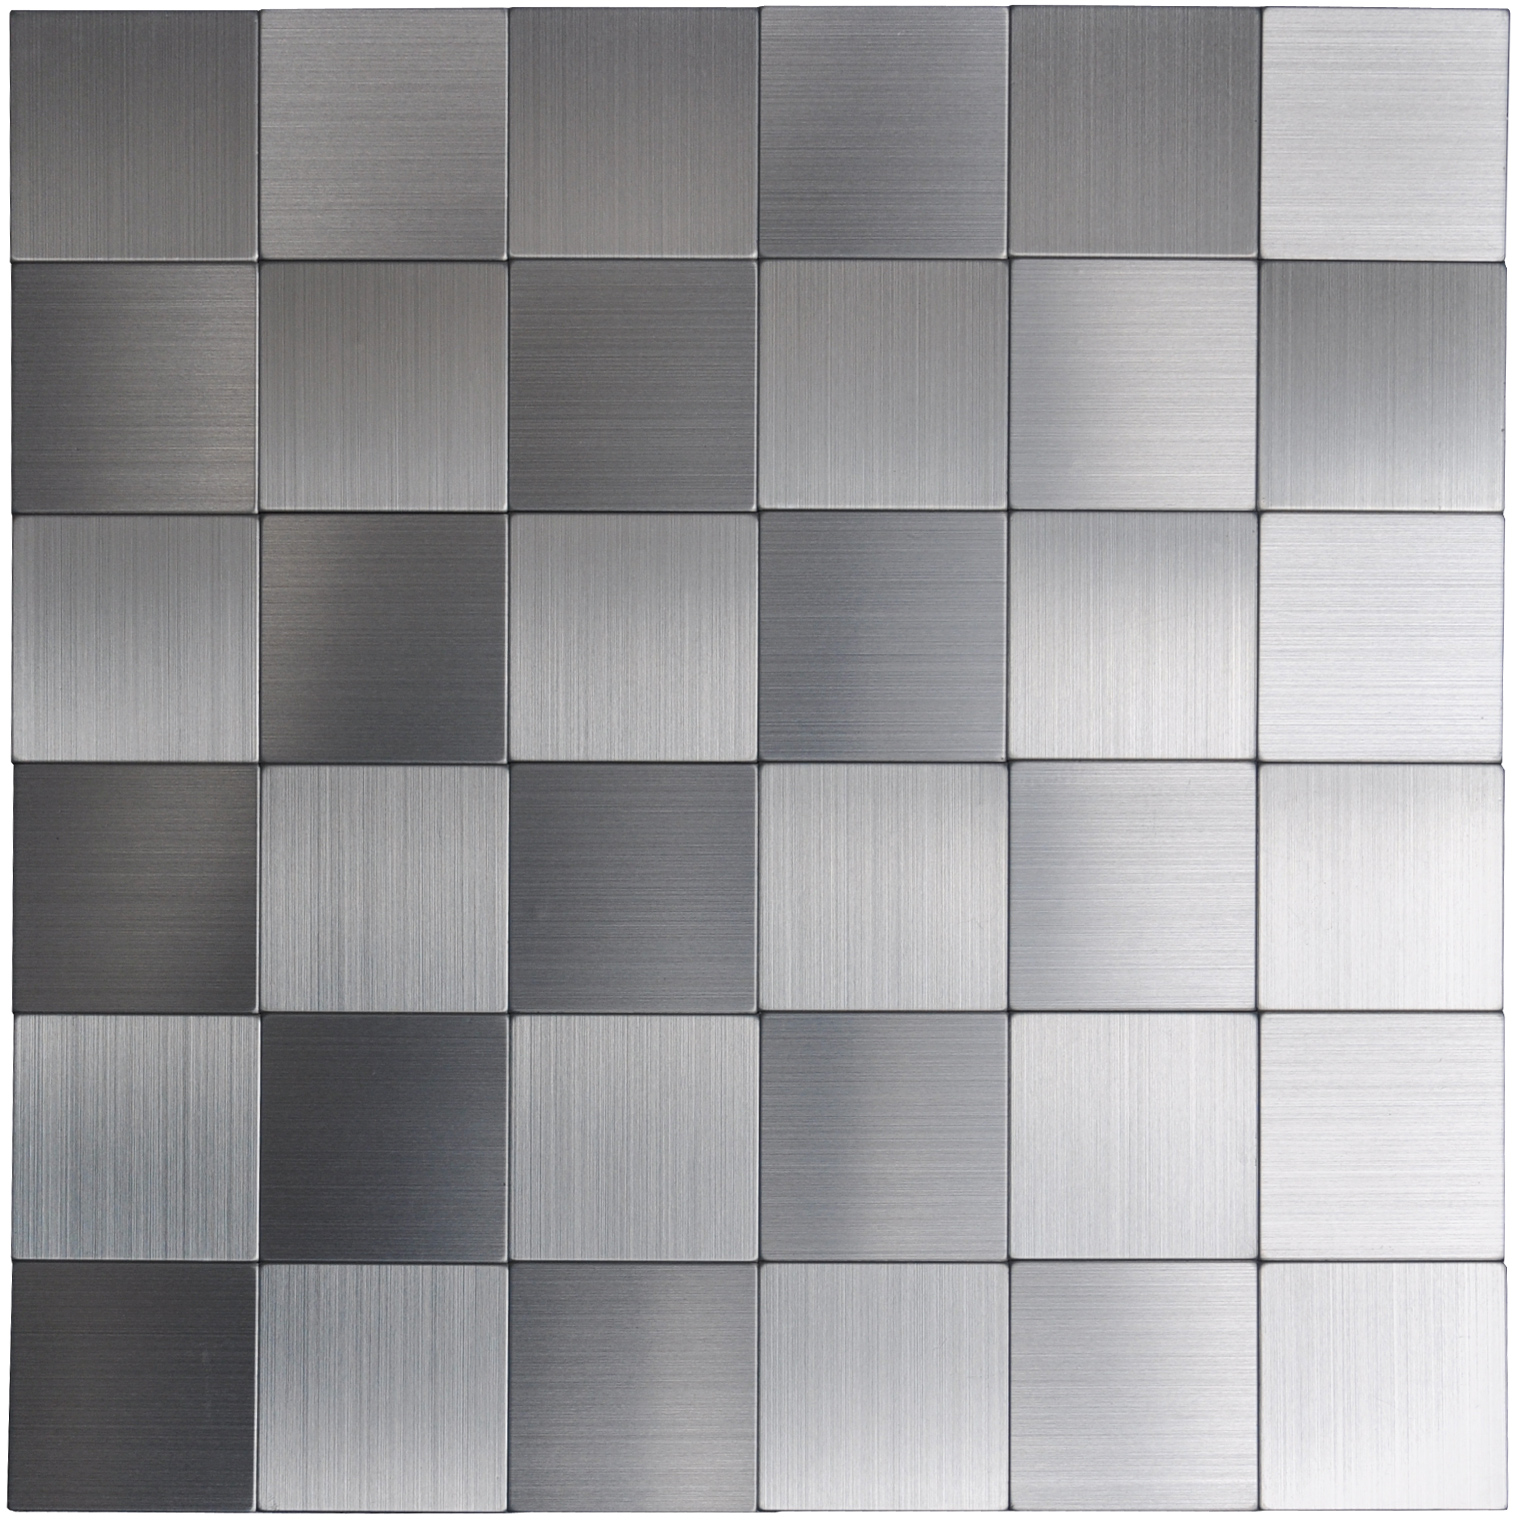 A16110 - Self-adhesive Metal Tiles 10 Pcs Stainless Peel N Stick Backsplashes Tiles 12x12In